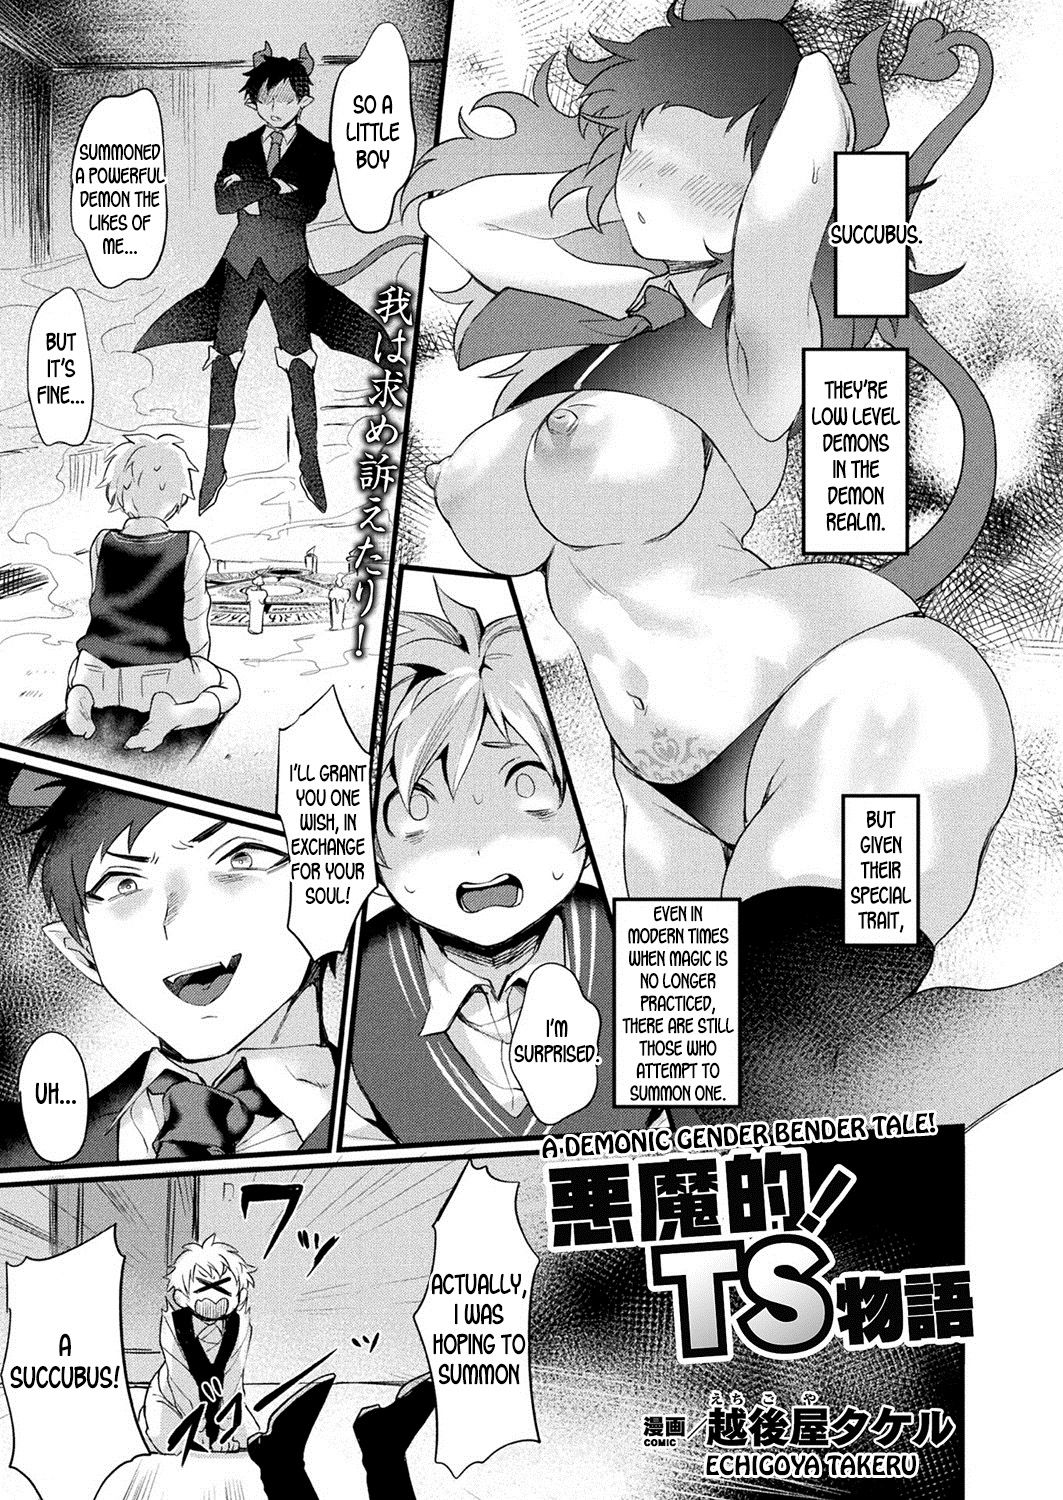 Kingdom Hearts Gender Bender Porn - A Demonic Gender Bender Tale! [Echigoya Takeru] Porn Comic | AllPornComic